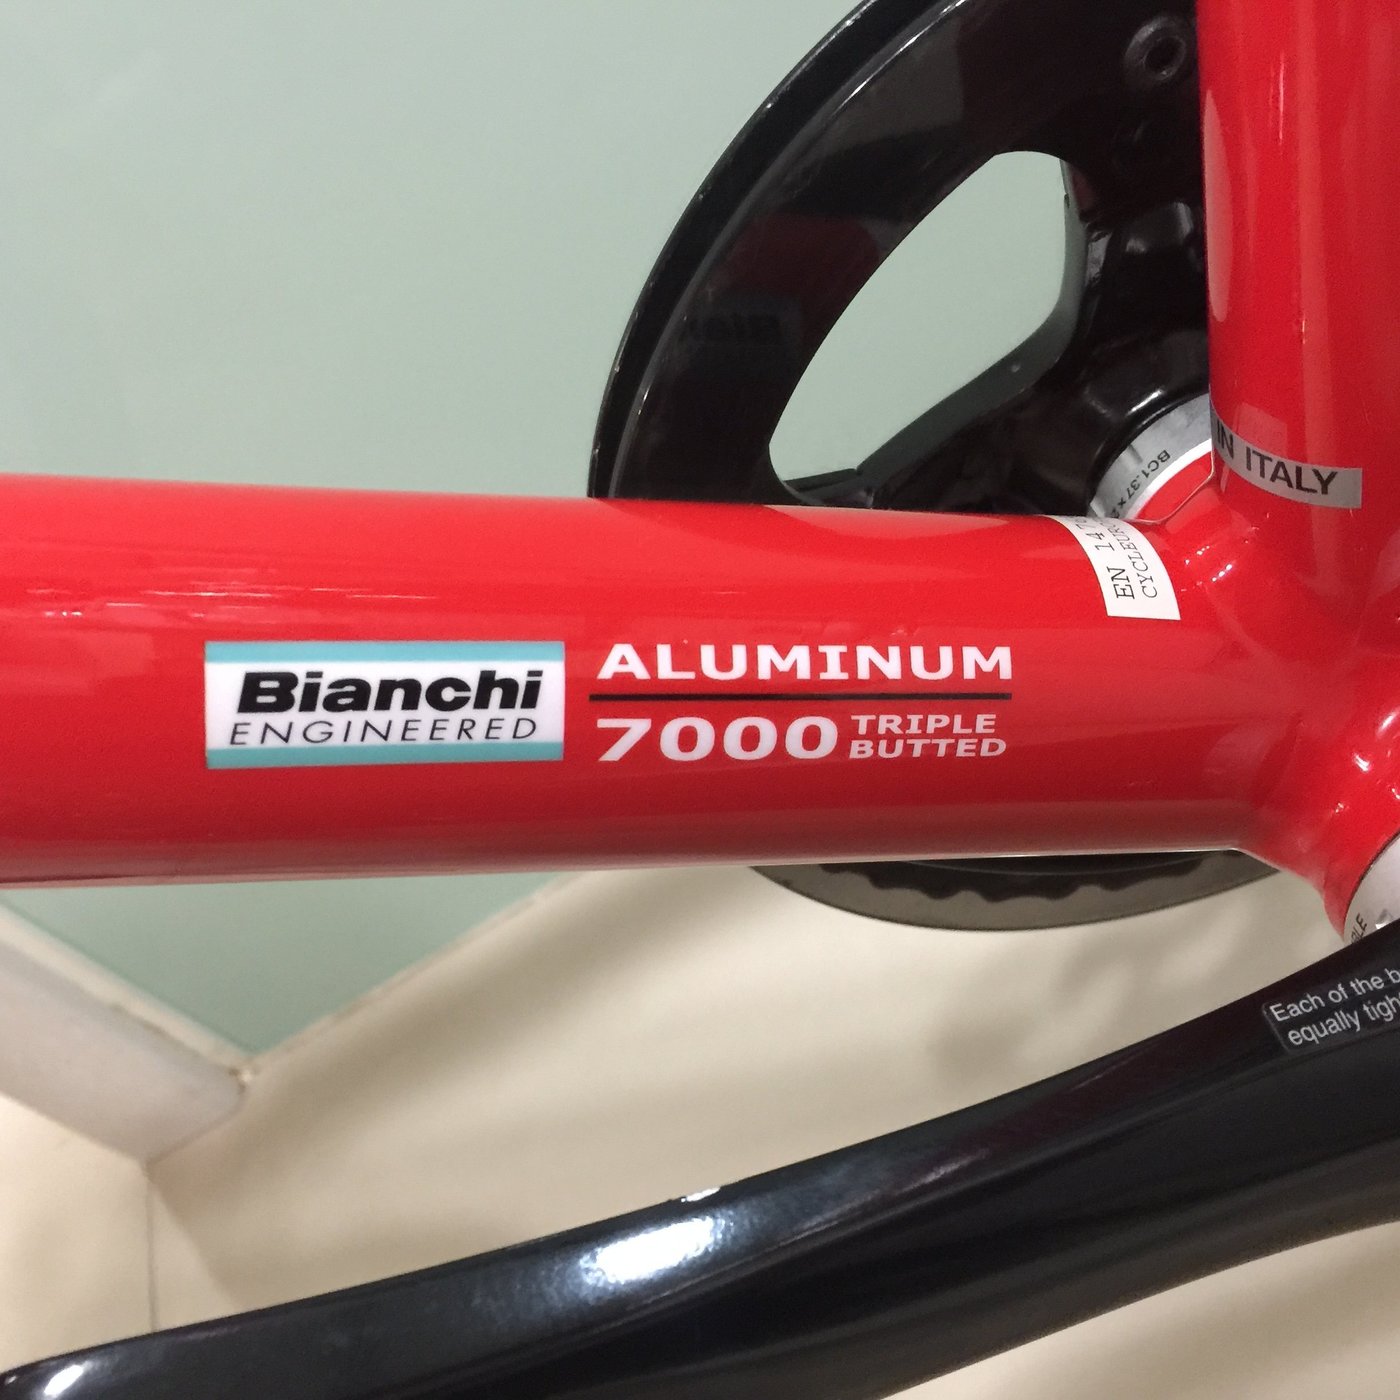 Ducati Panigale X Bianchi 平把公路車 Yahoo奇摩拍賣